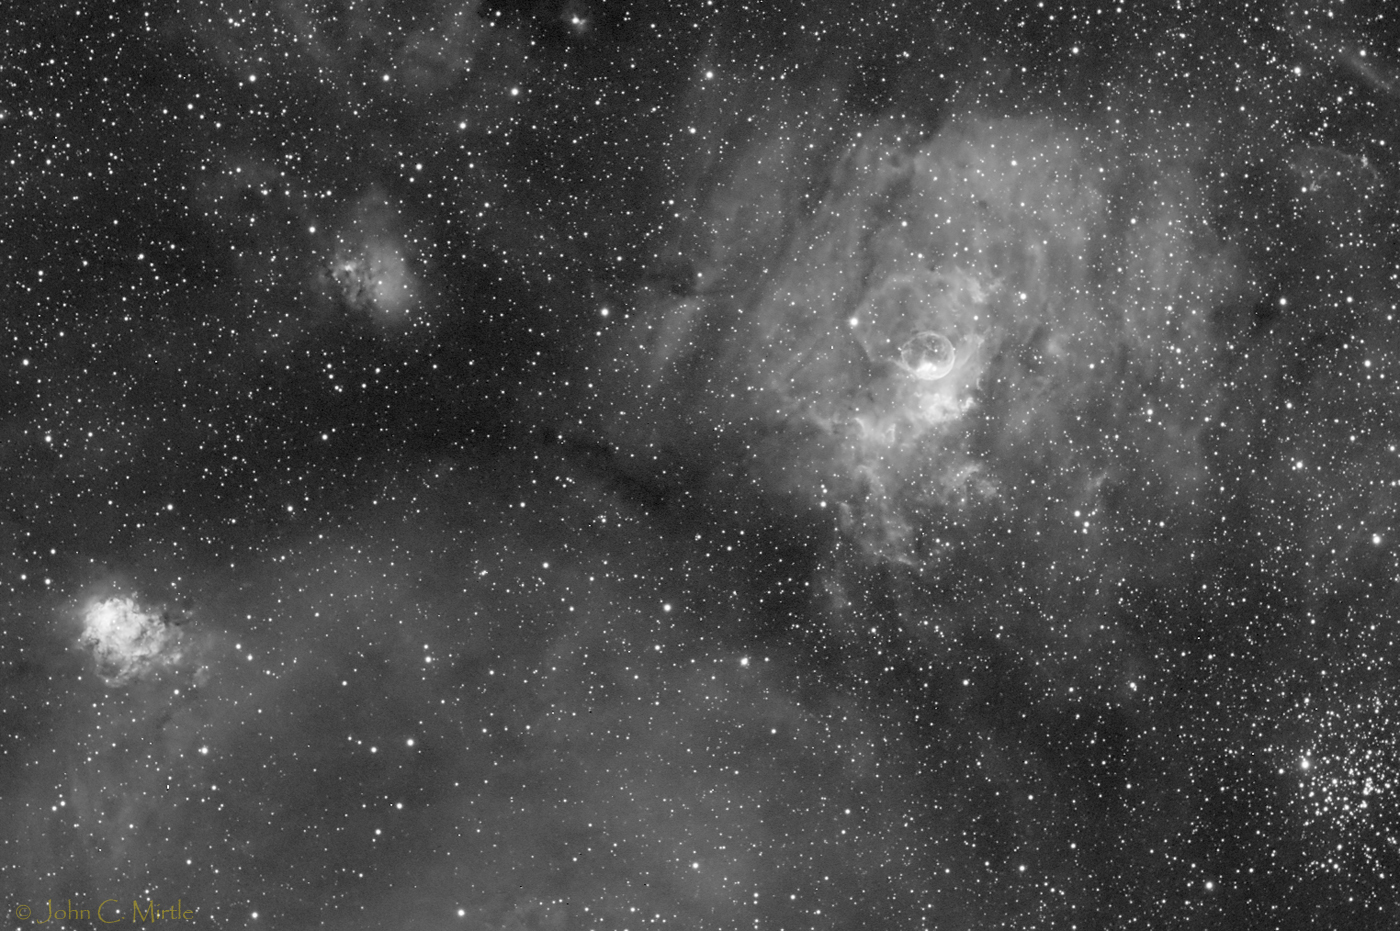 NGC7635 - Emission nebula in Cassiopeia